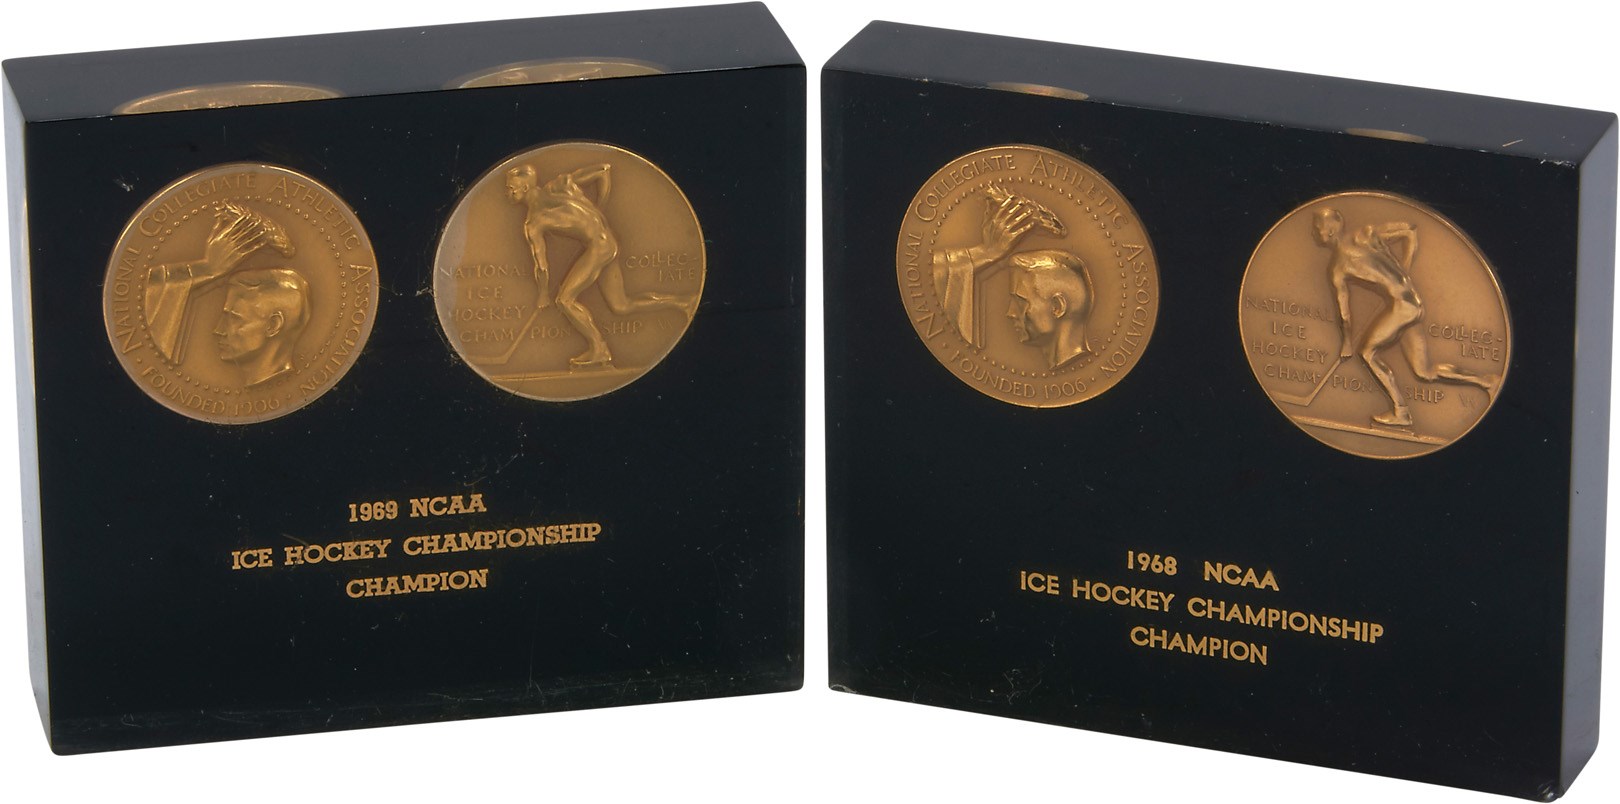 The Craig Patrick Hockey Collection - 1968 and 1969 Craig Patrick University of Denver NCAA Ice Hockey Championship Awards